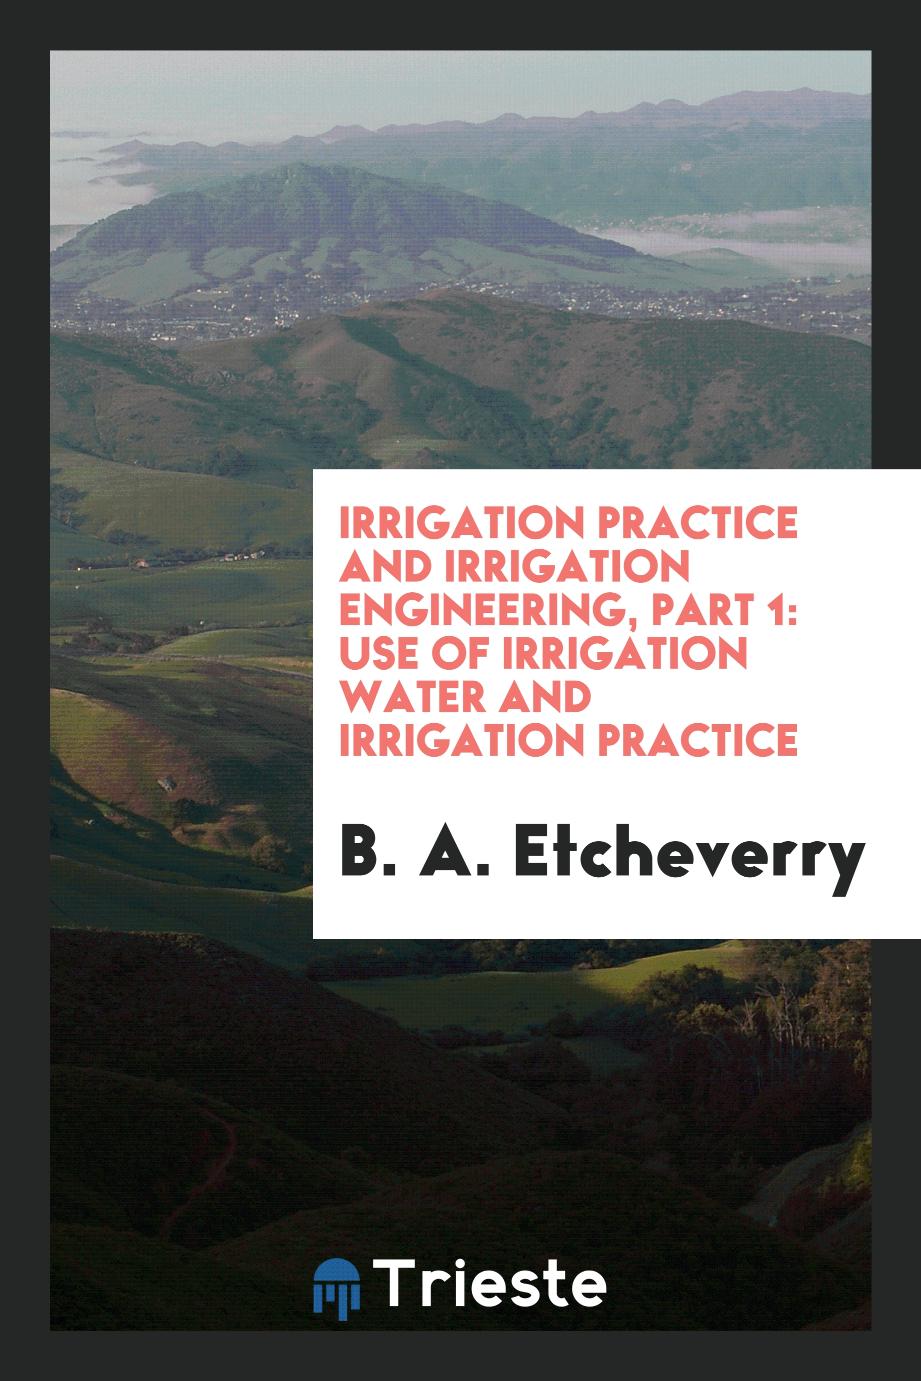 Irrigation practice and irrigation engineering, Part 1: Use of irrigation water and irrigation practice